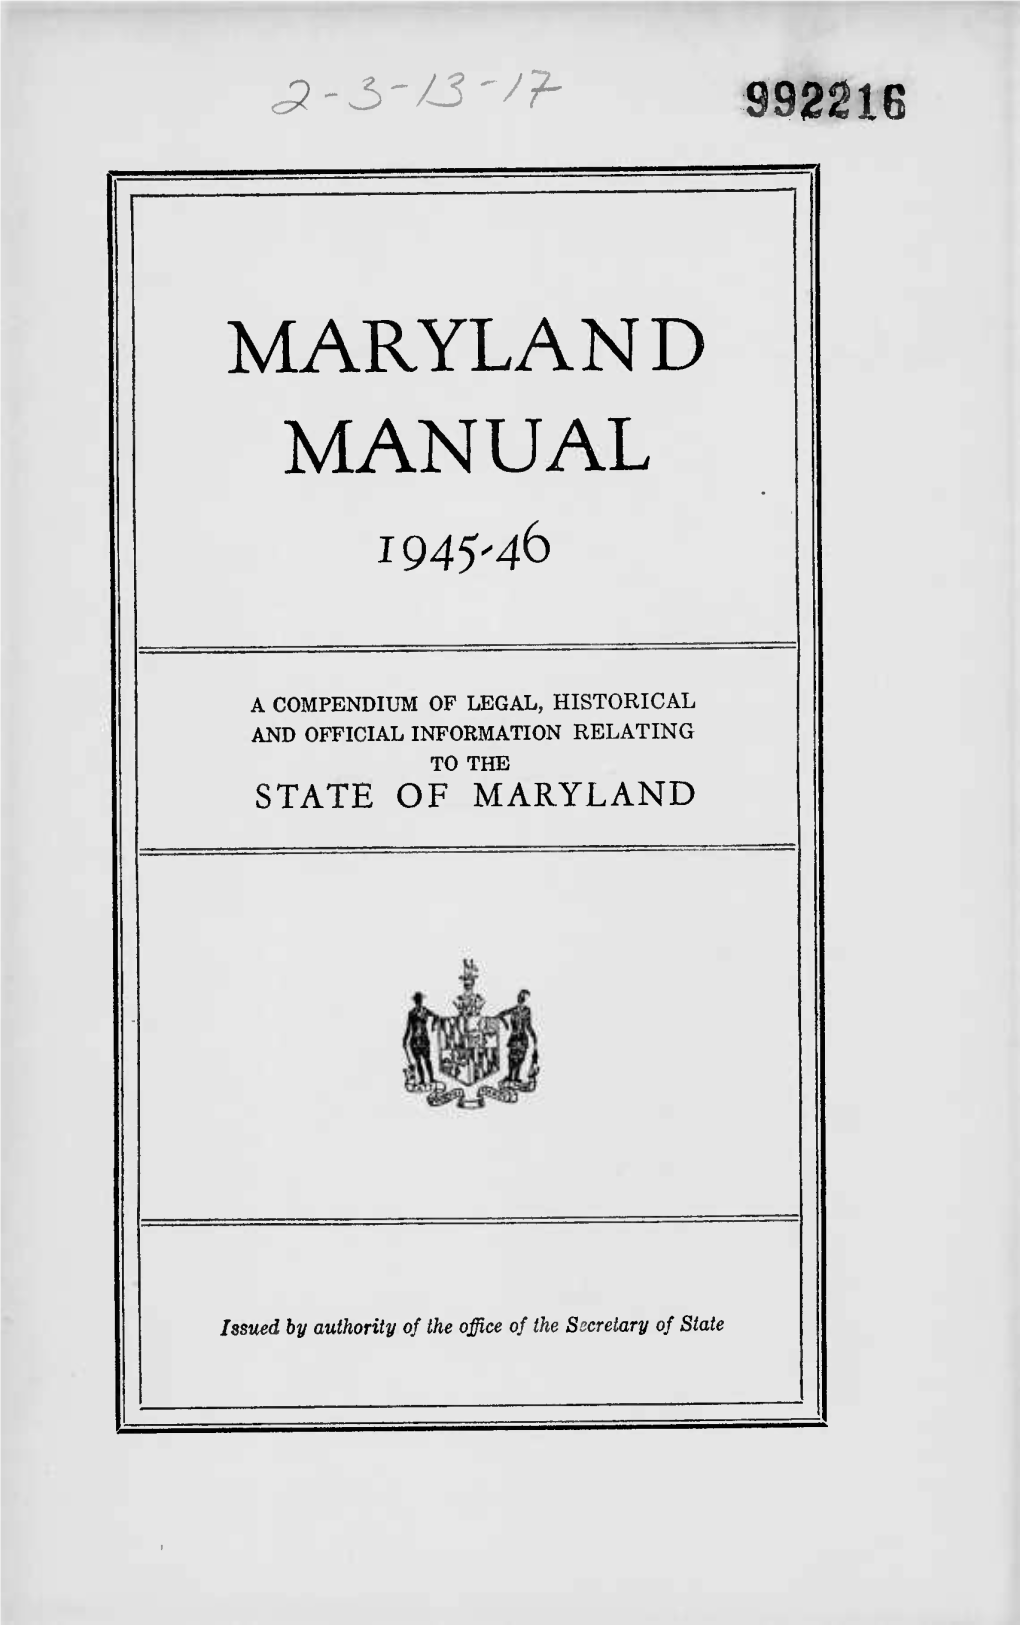 £-3-13''?- 992216 Maryland Manual 1945-46 A